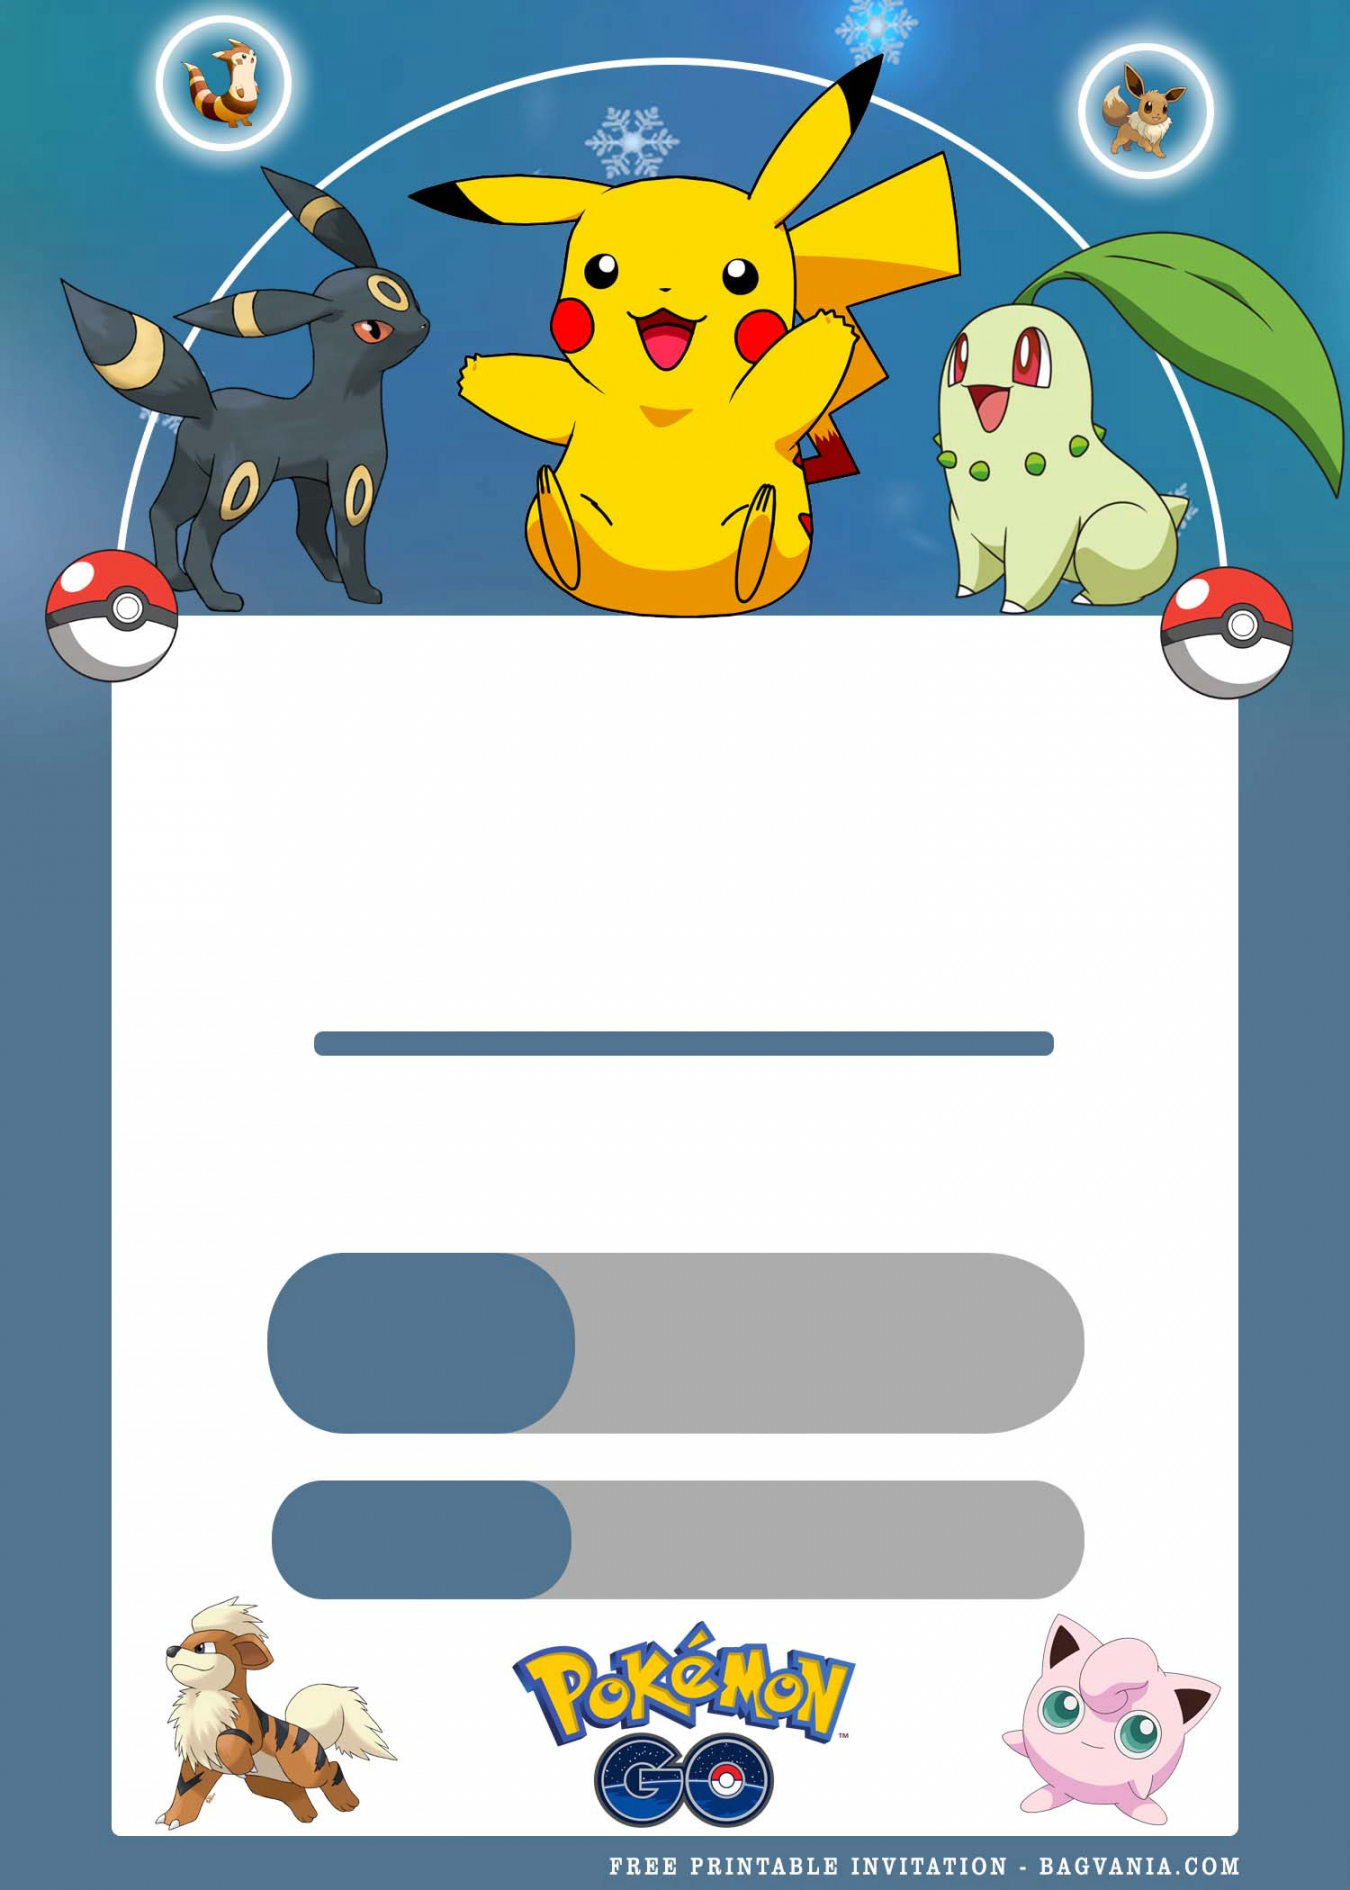 FREE Printable) – Pokemon Birthday Invitation Templates  FREE  - FREE Printables - Free Printable Pokemon Invitation Template